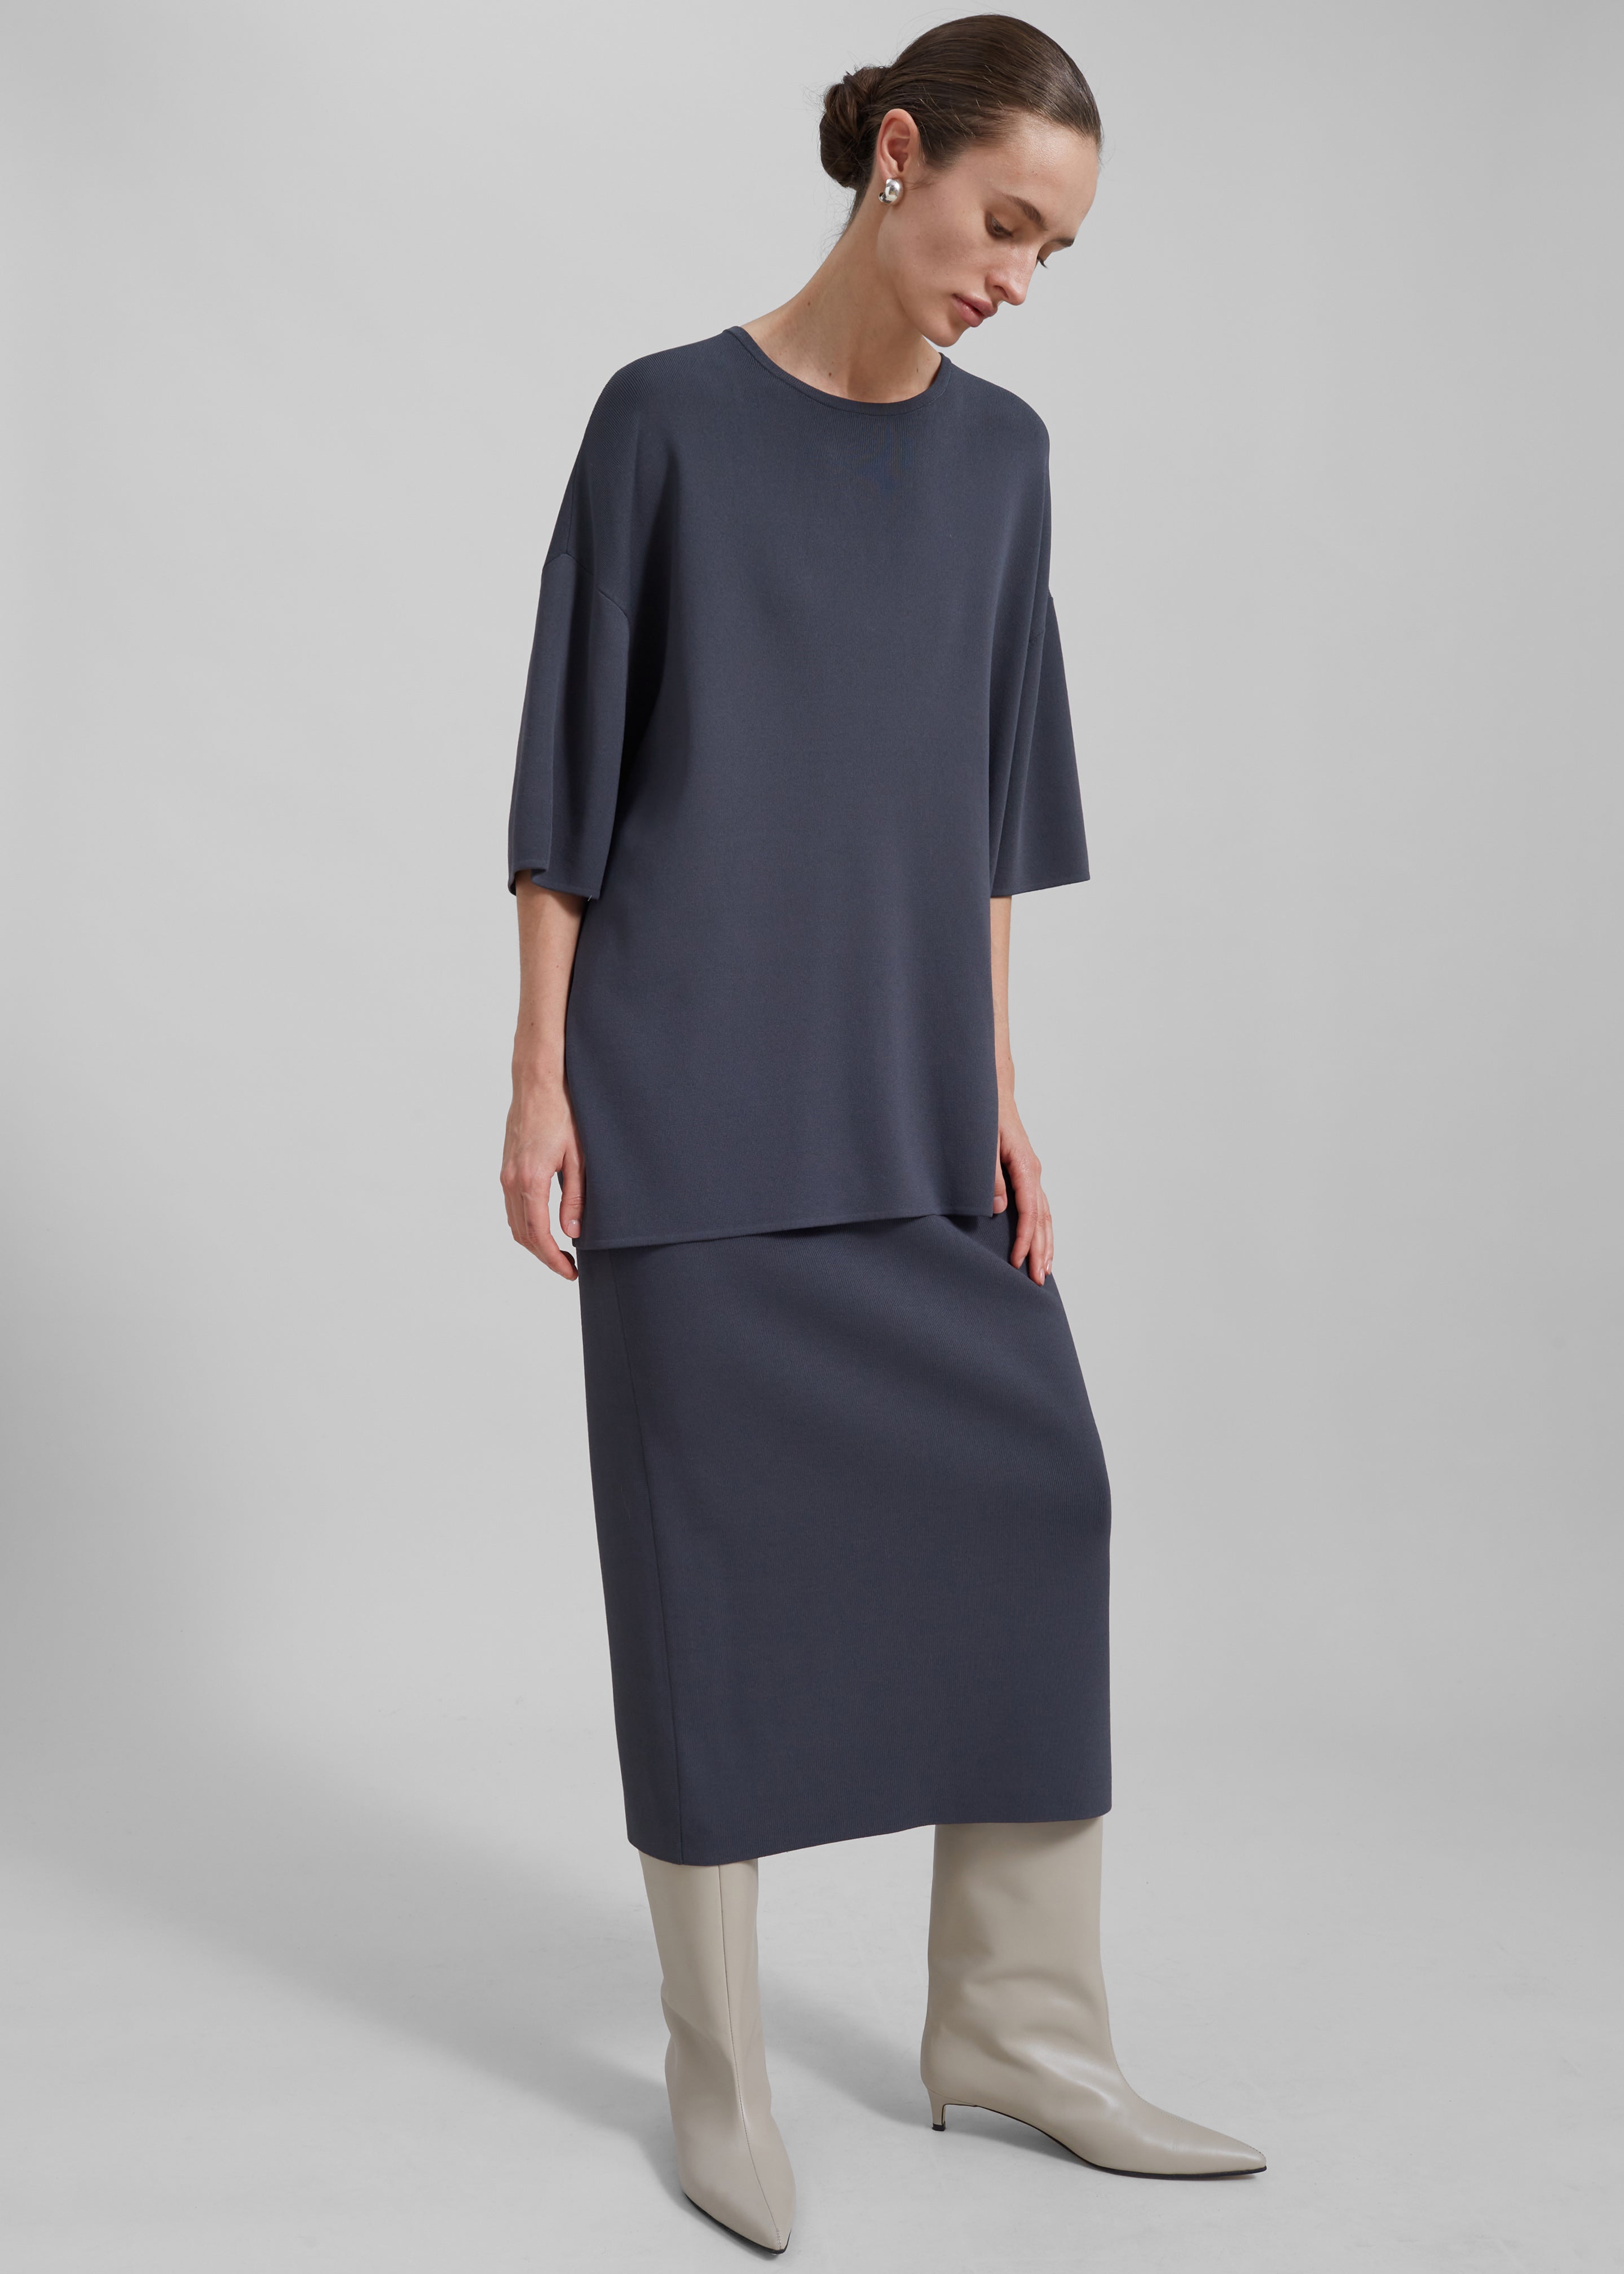 Solange Knit Pencil Skirt - Grey - 6